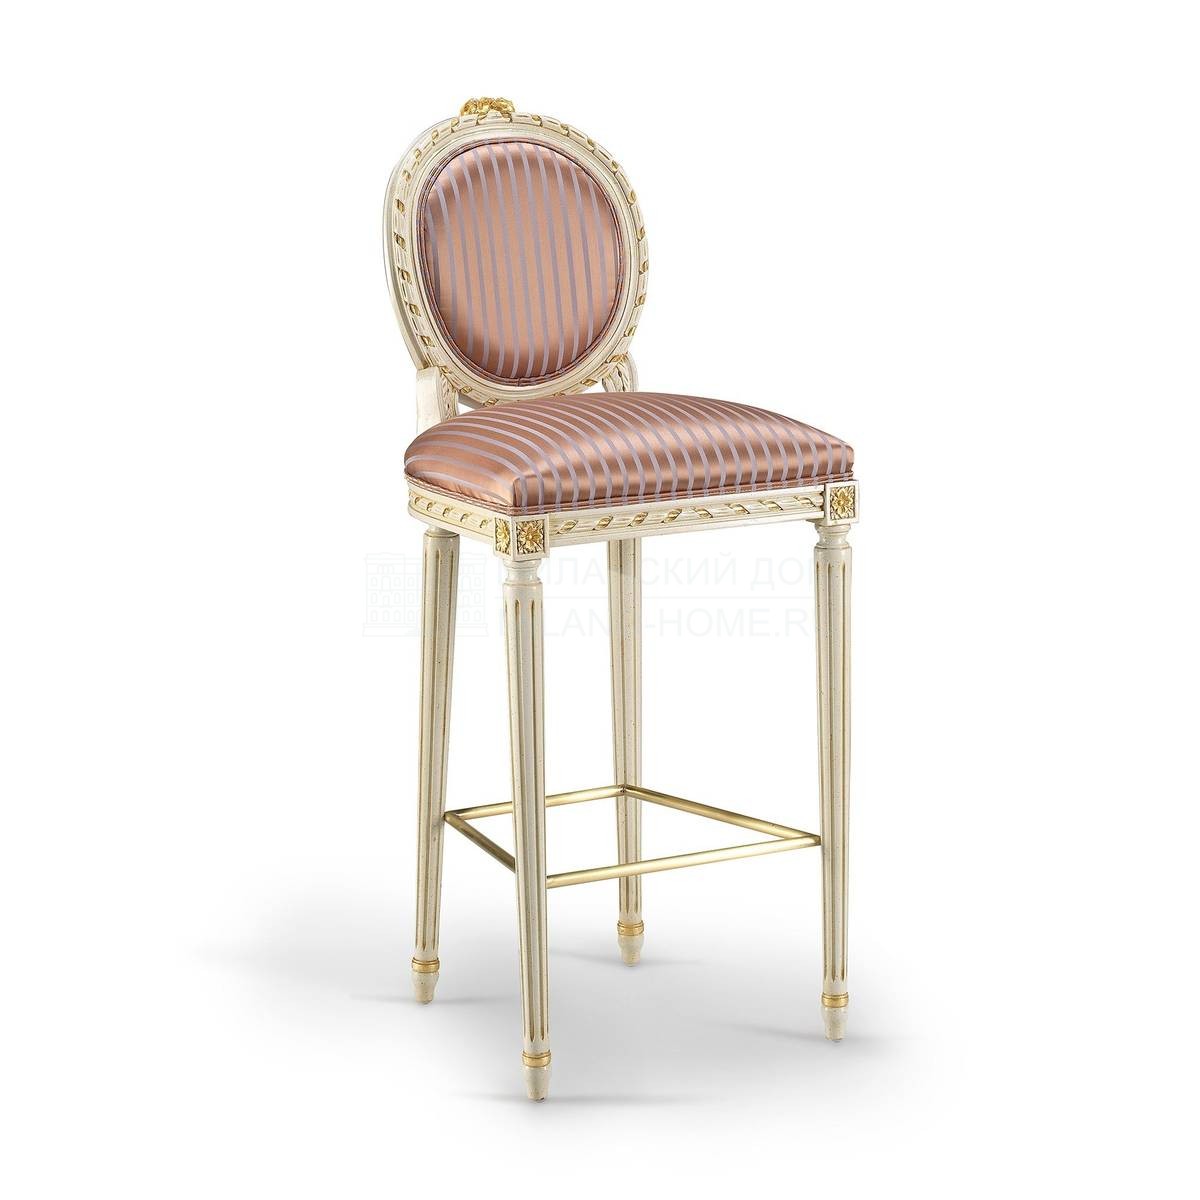 Барный стул The Upholstery/S6.04 из Италии фабрики FRANCESCO MOLON